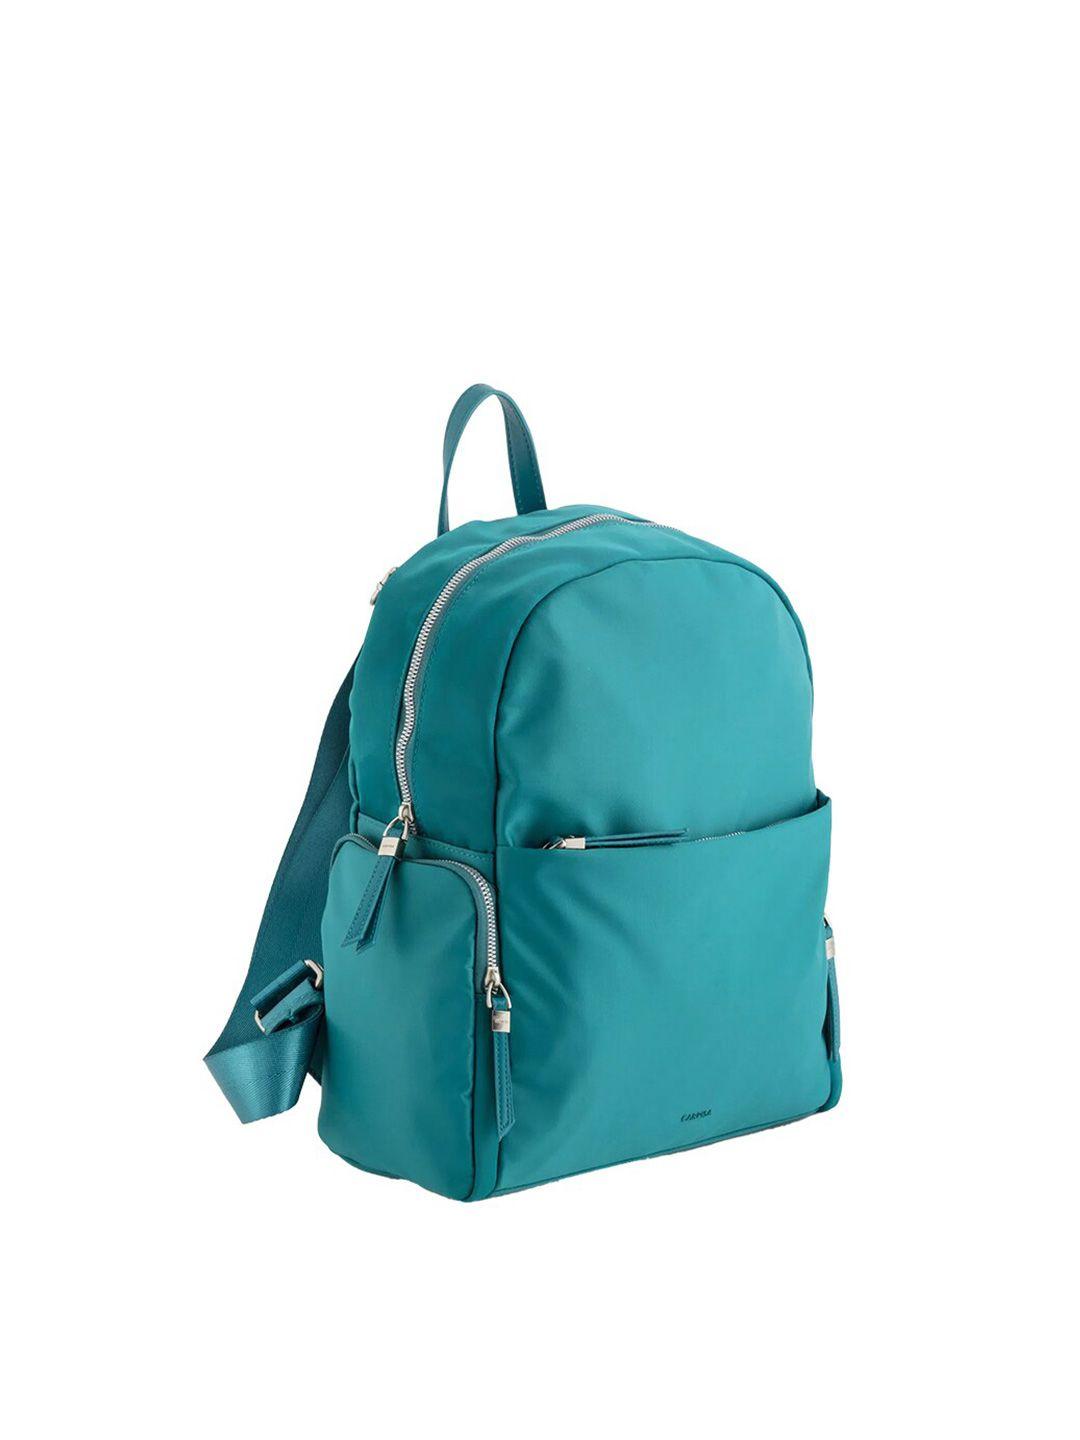 carpisa women fabric small backpack